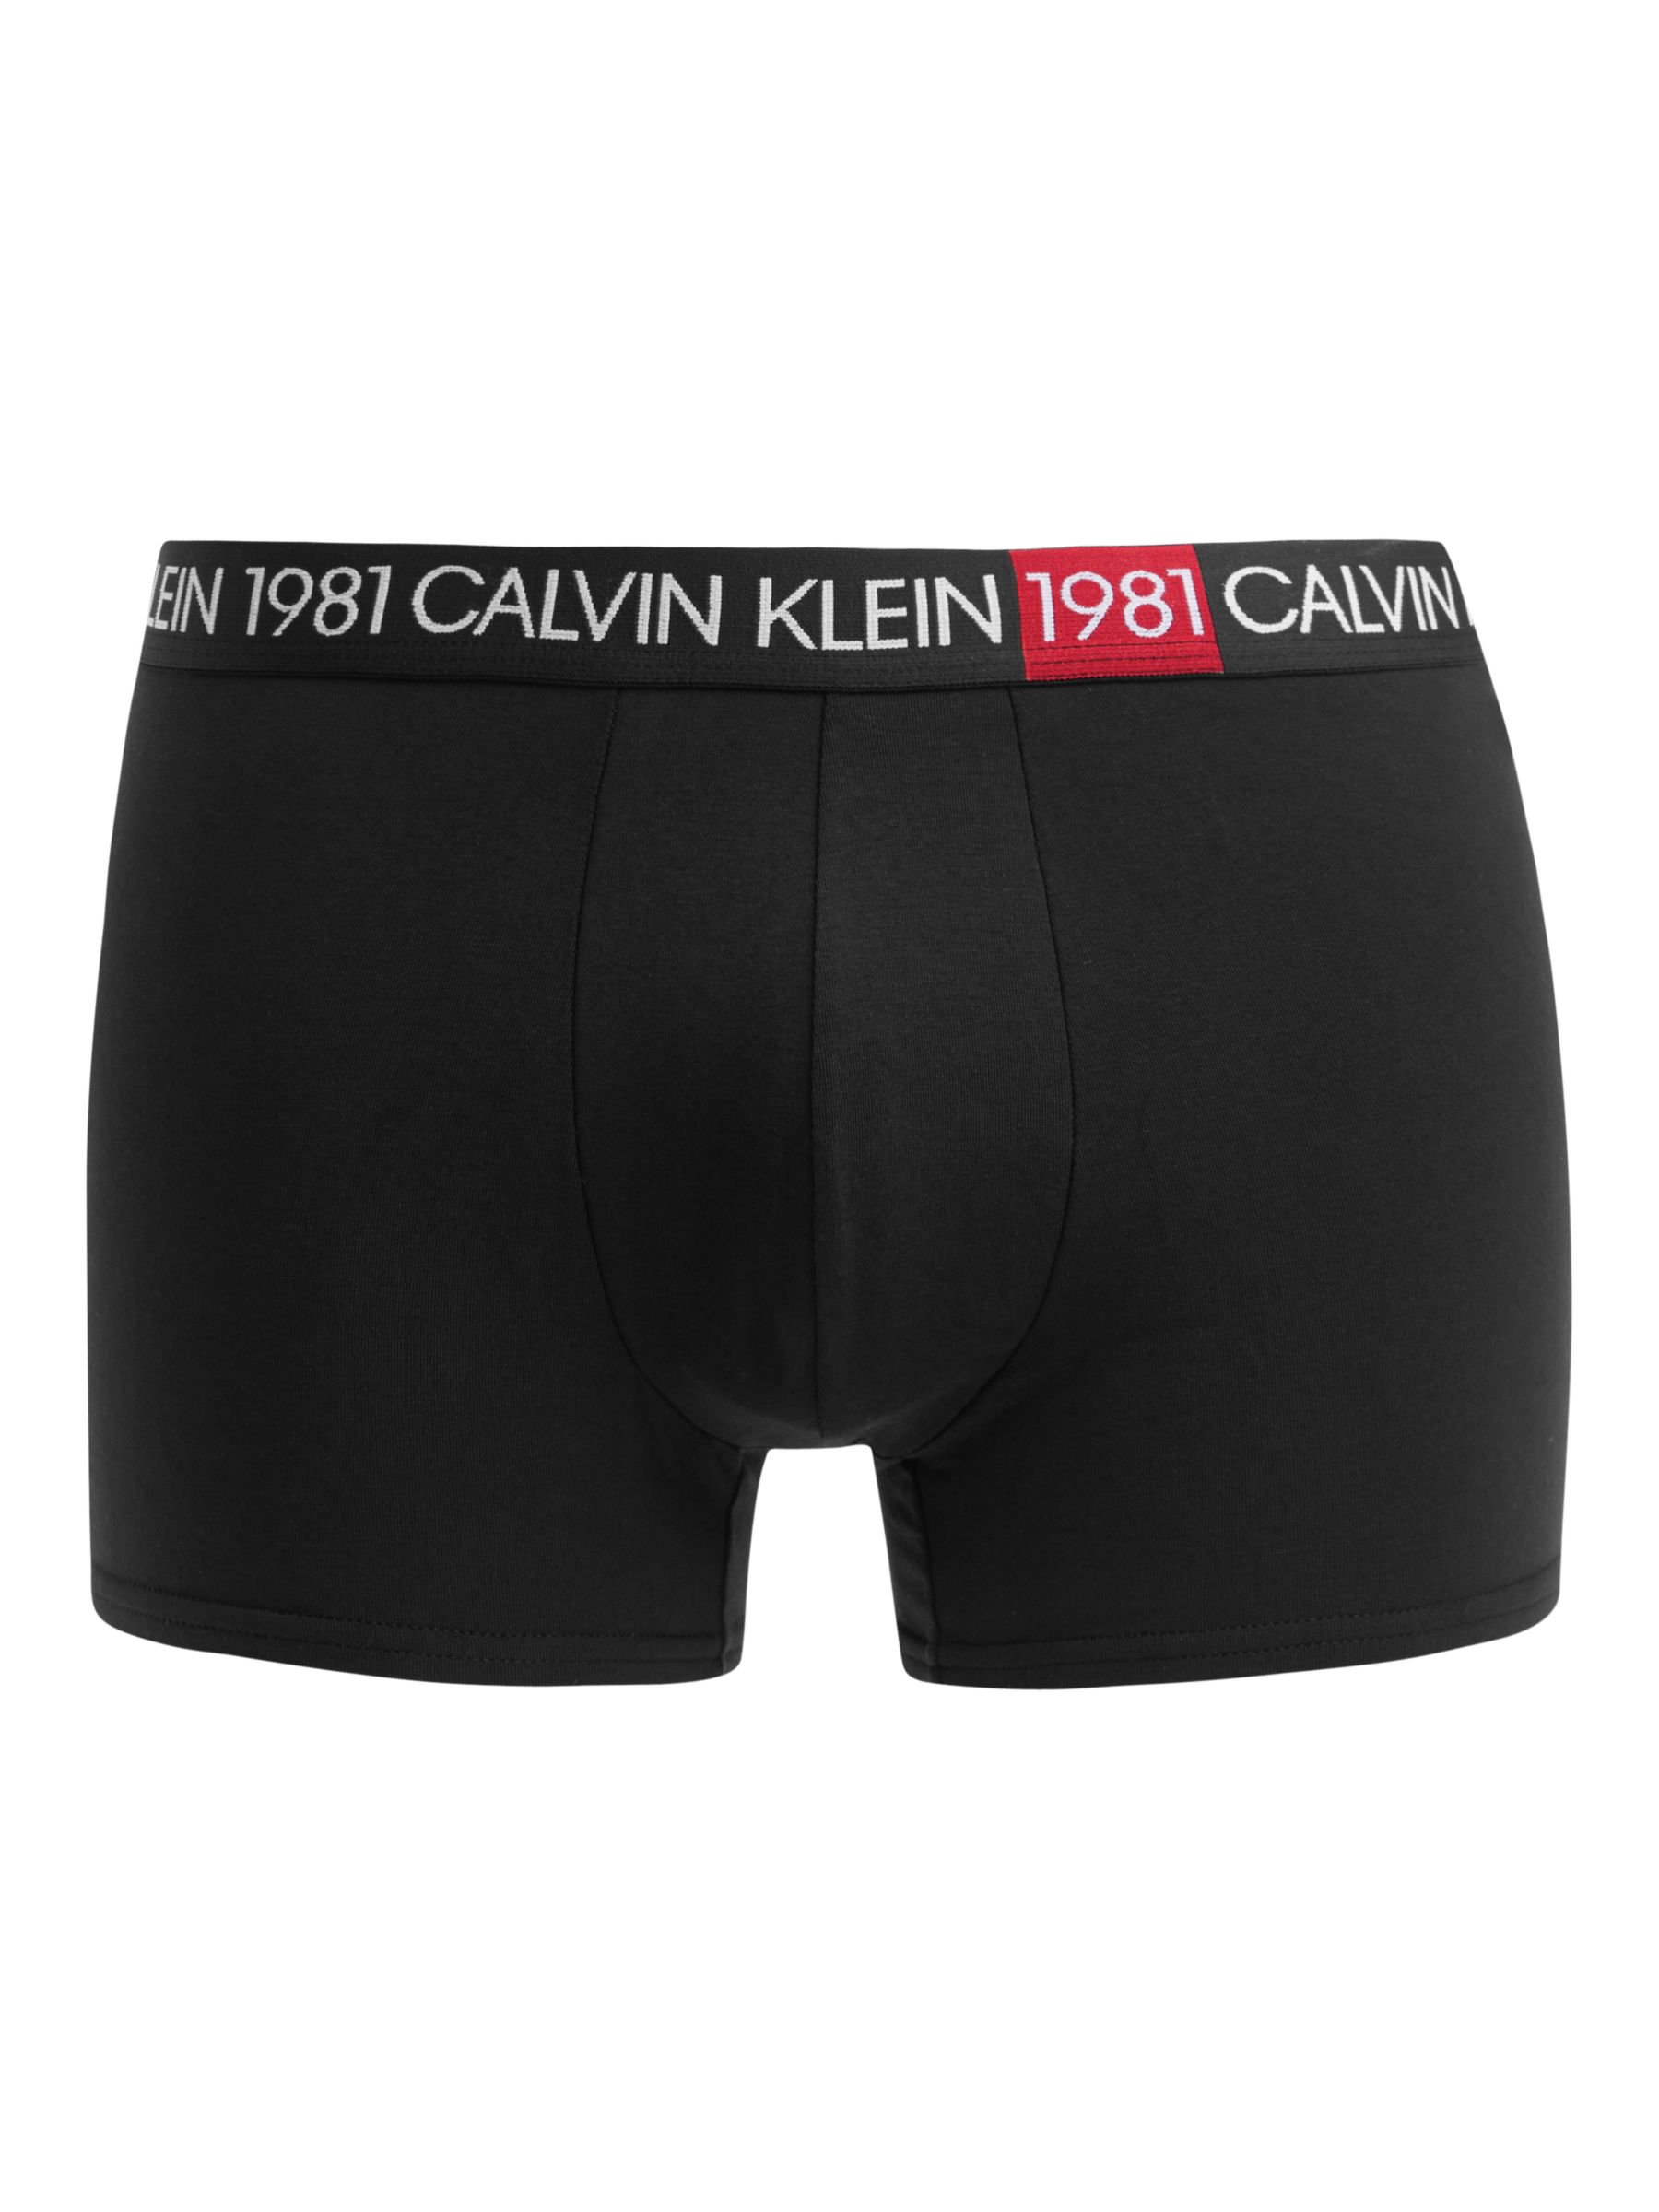 Calvin Klein 1981 Bold Cotton Stretch Trunks, Black